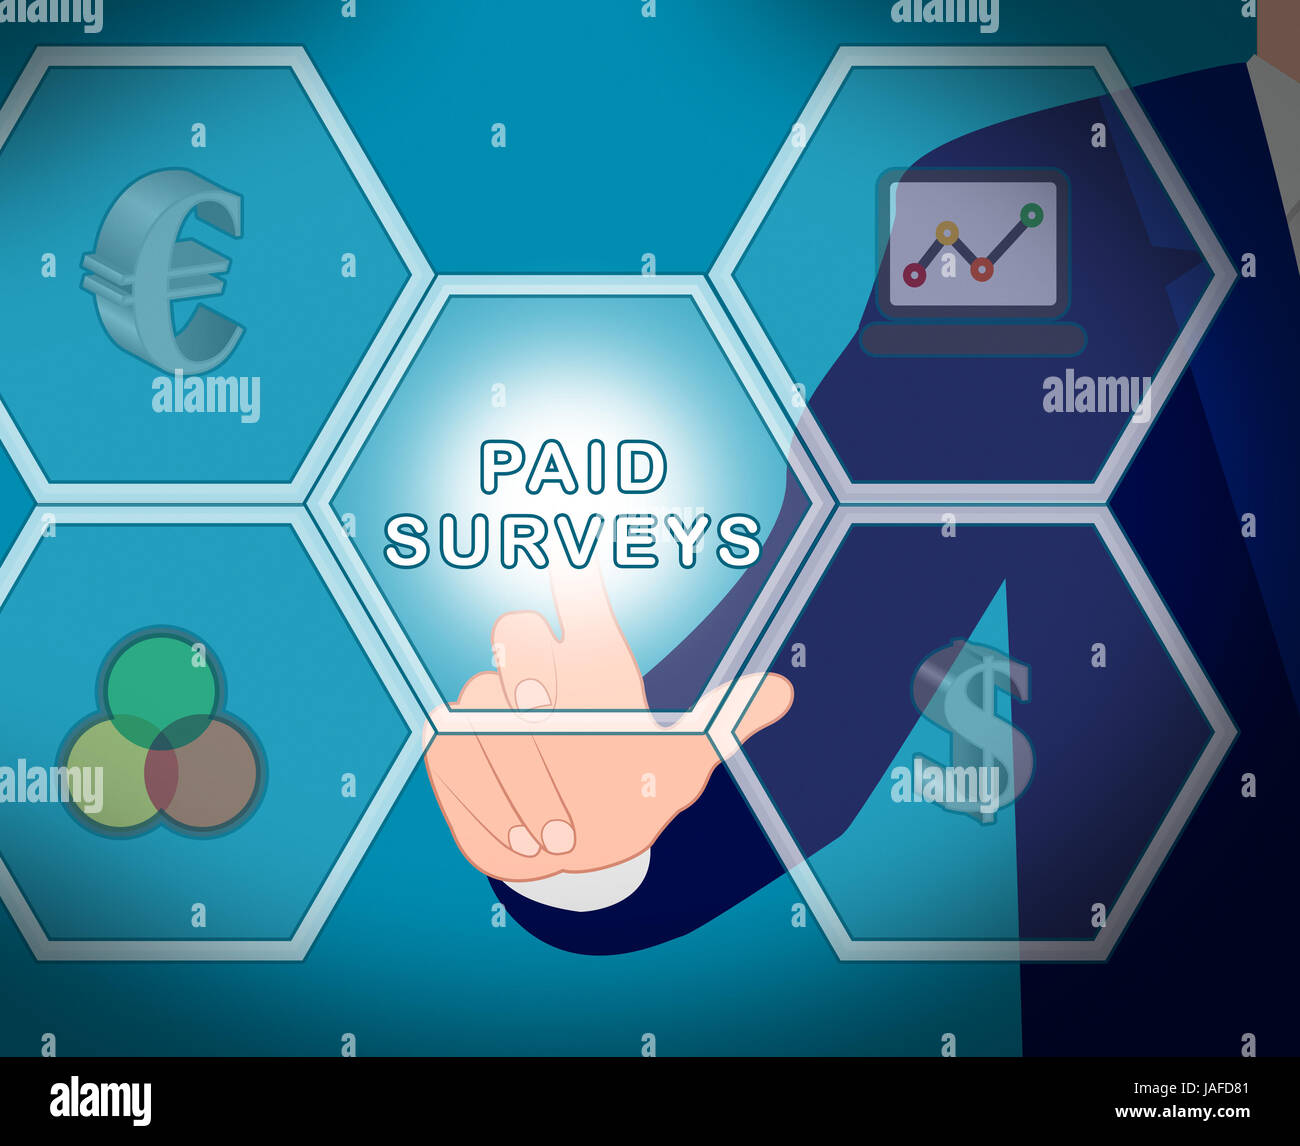 Paid Icons Surveys Displays Market Research 3d Illustration Stock Photo